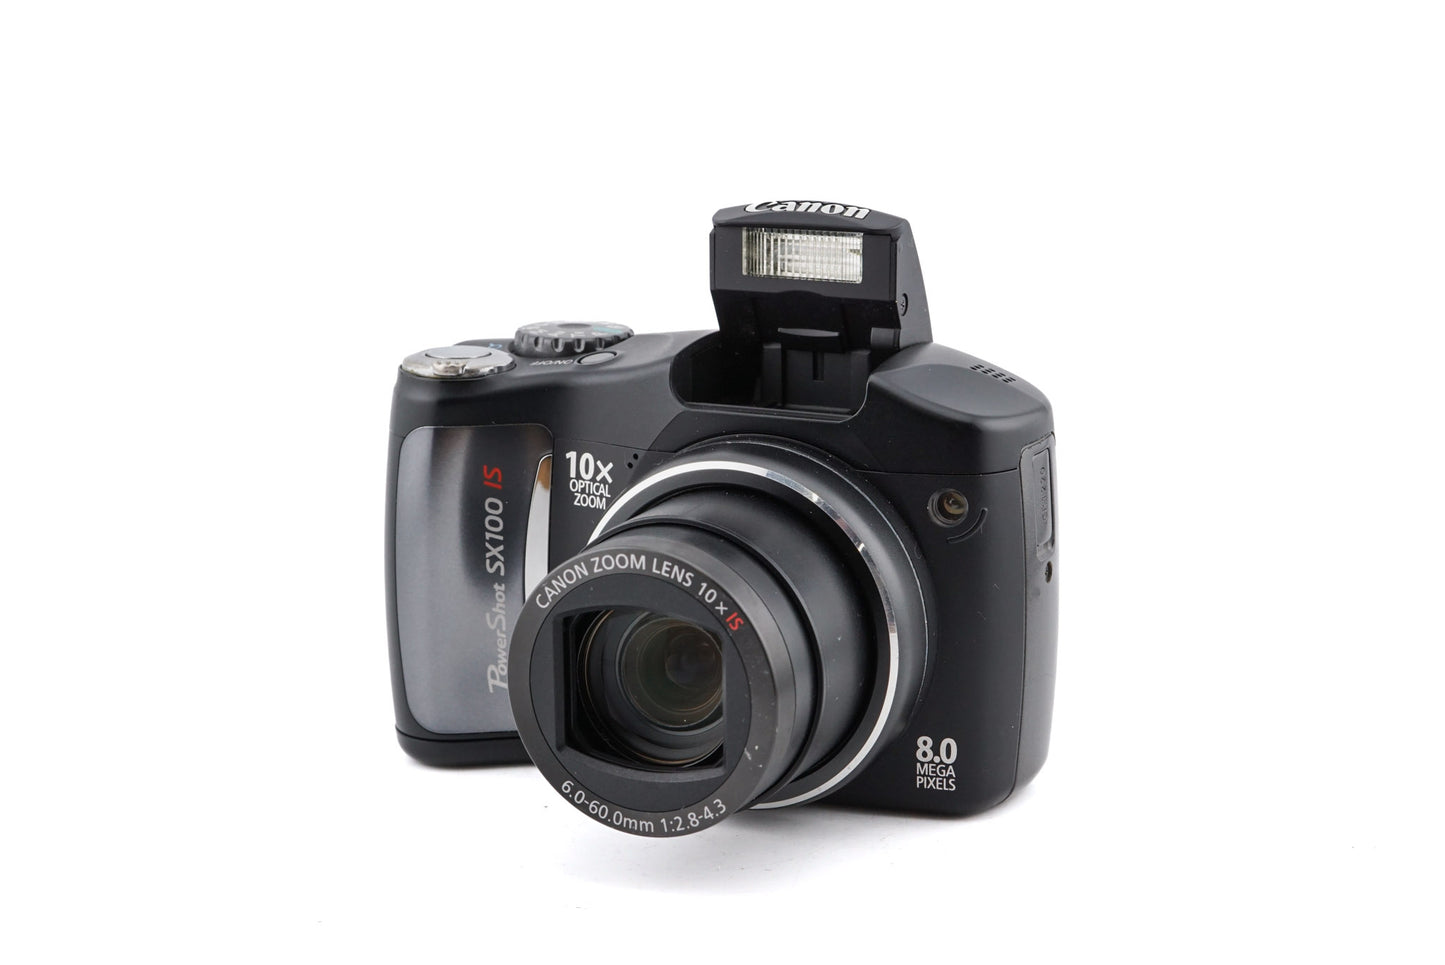 Canon PowerShot SX100 IS - Camera